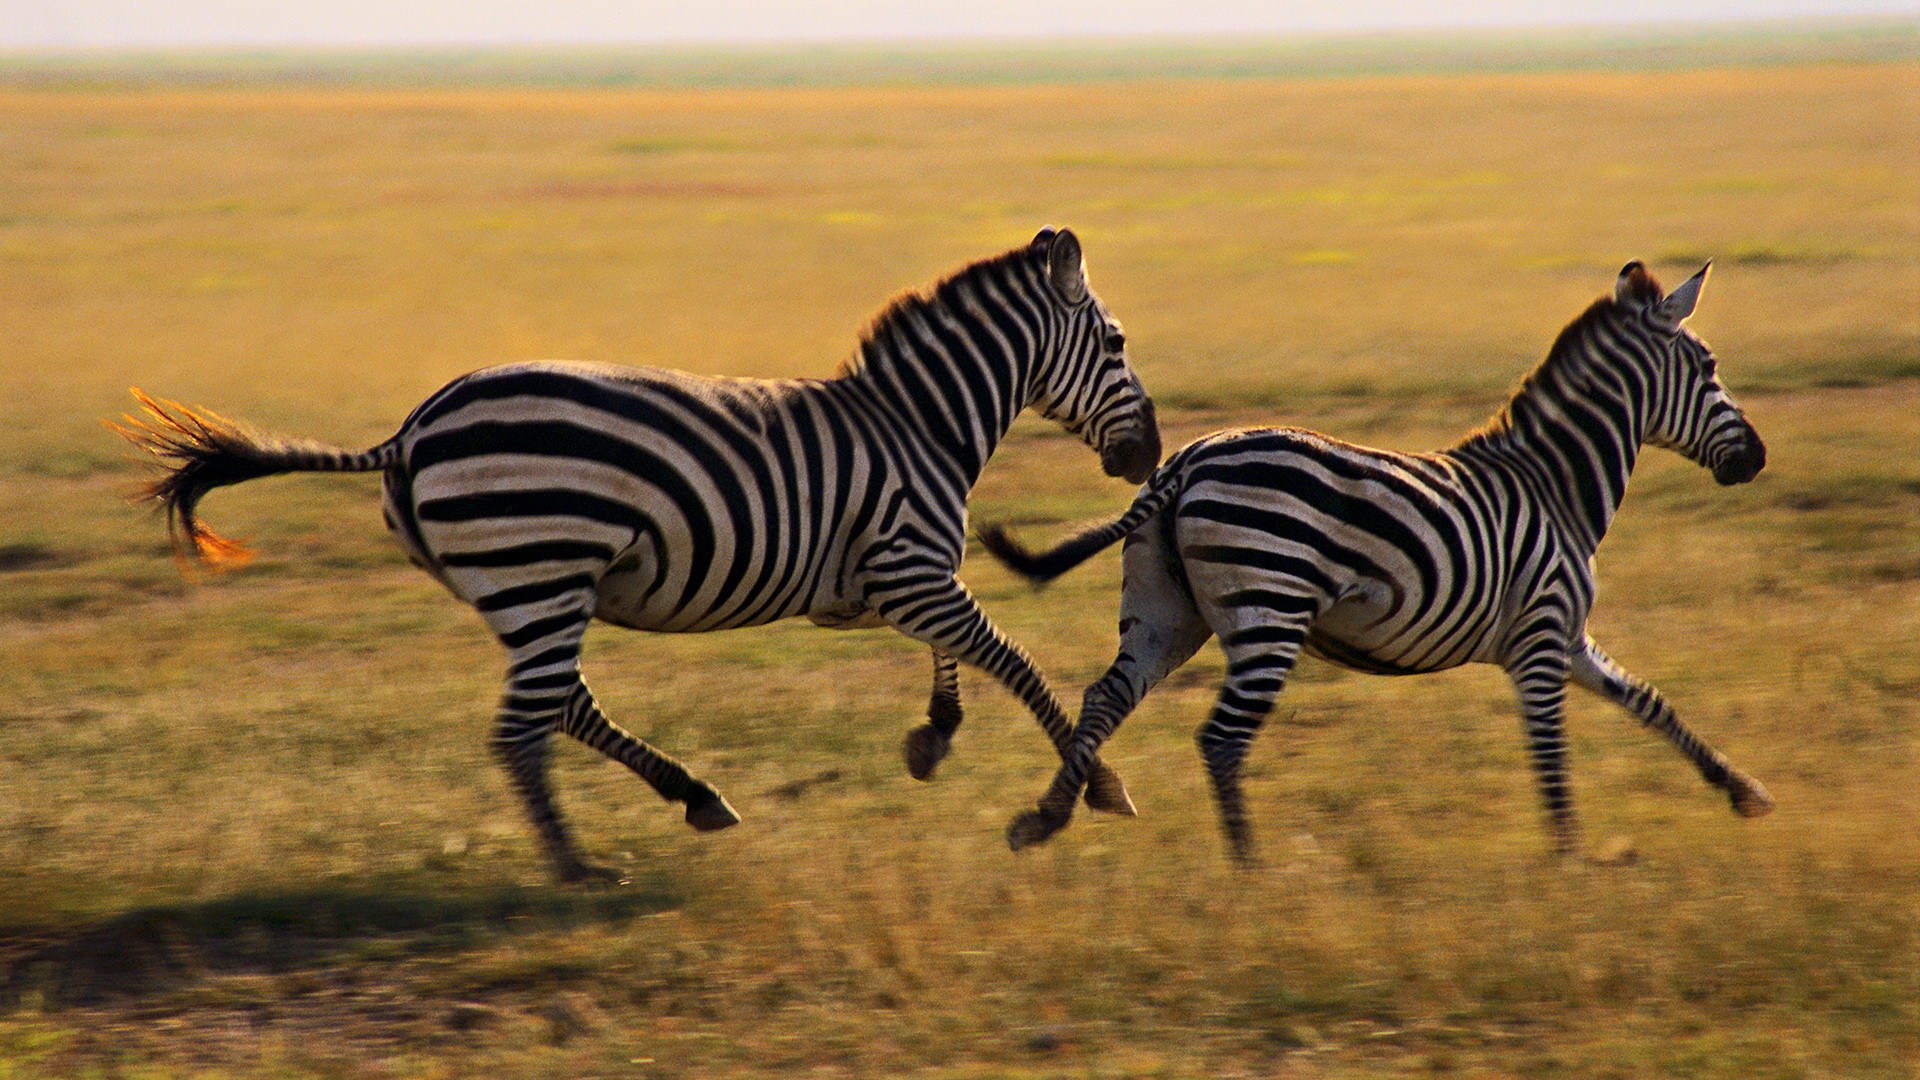 Li-Zebra pele ho sefefo se matla, Tanzania, Serengeti Park